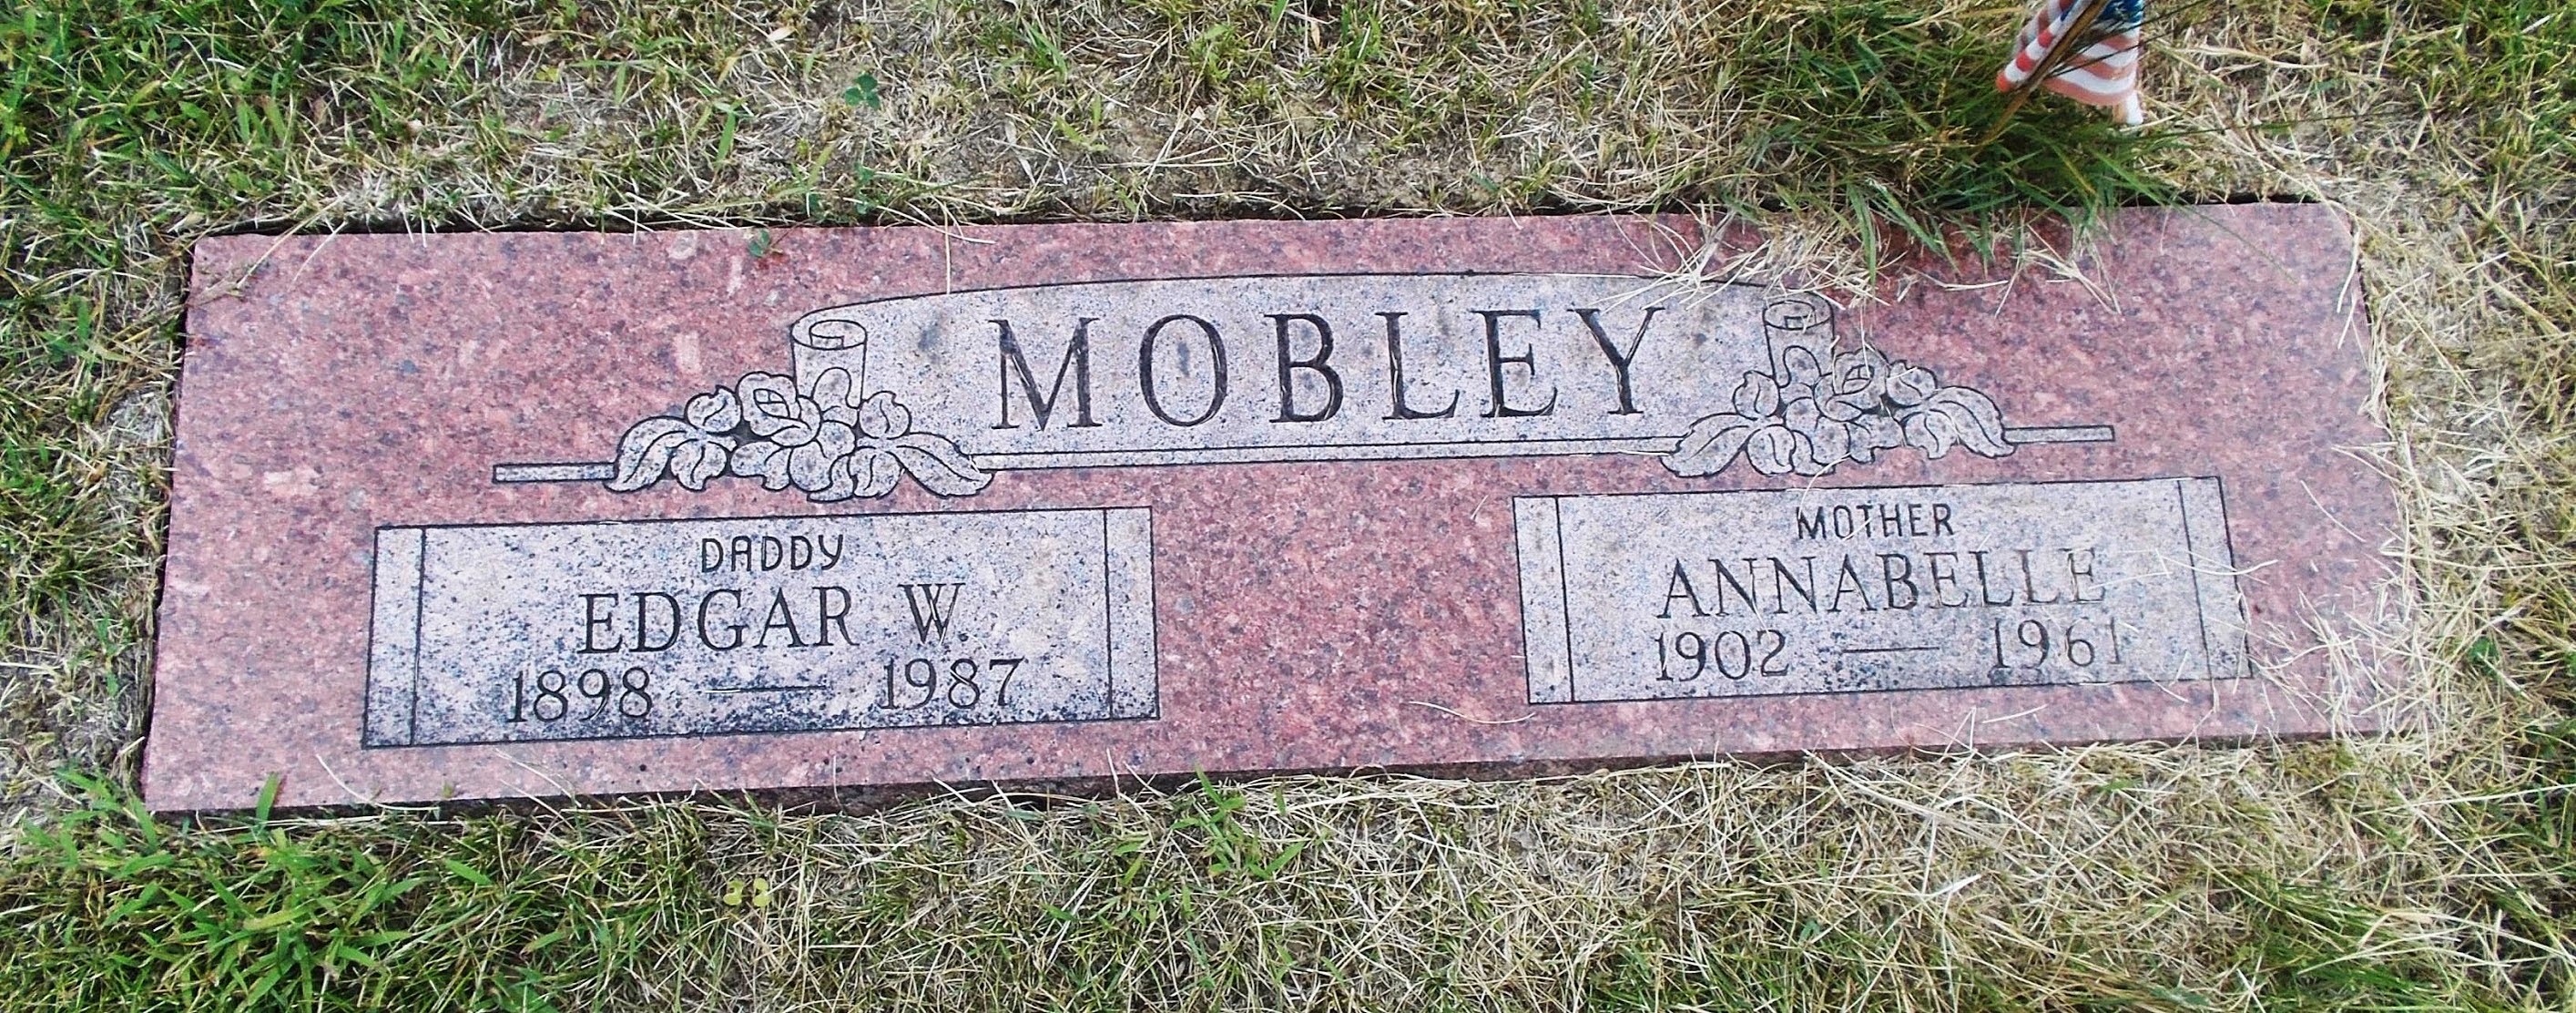 Annabelle Mobley